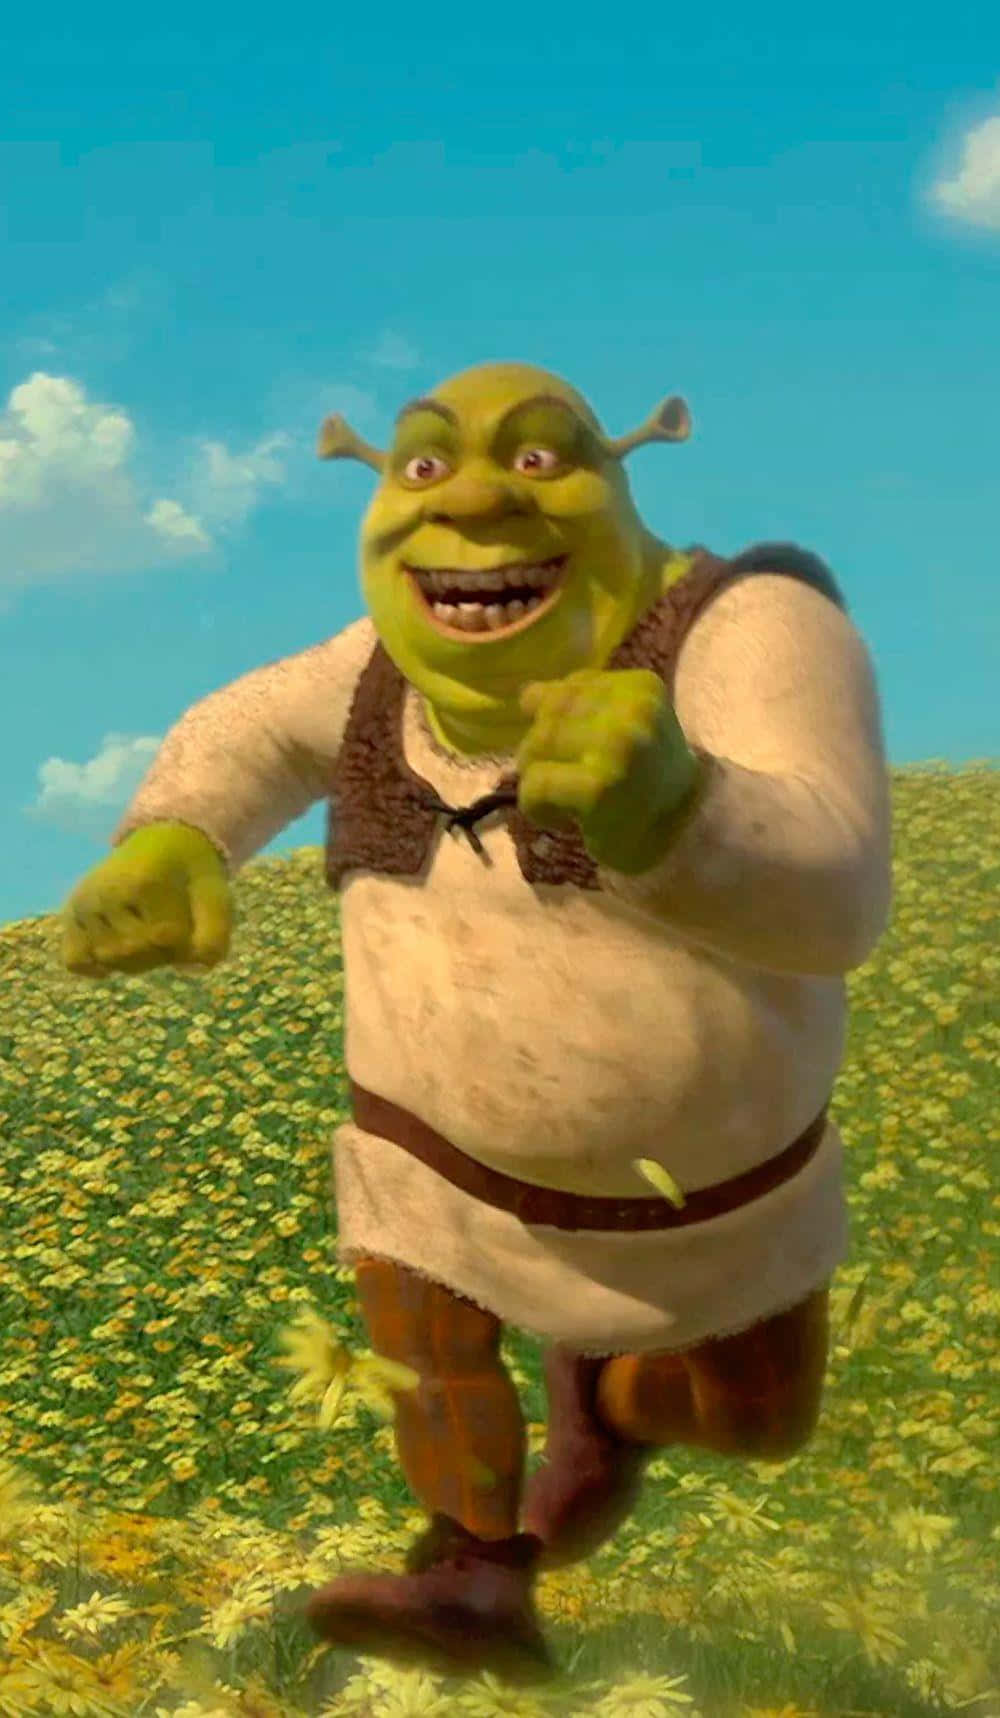 Funny Shrek Running On A Flower Field Background